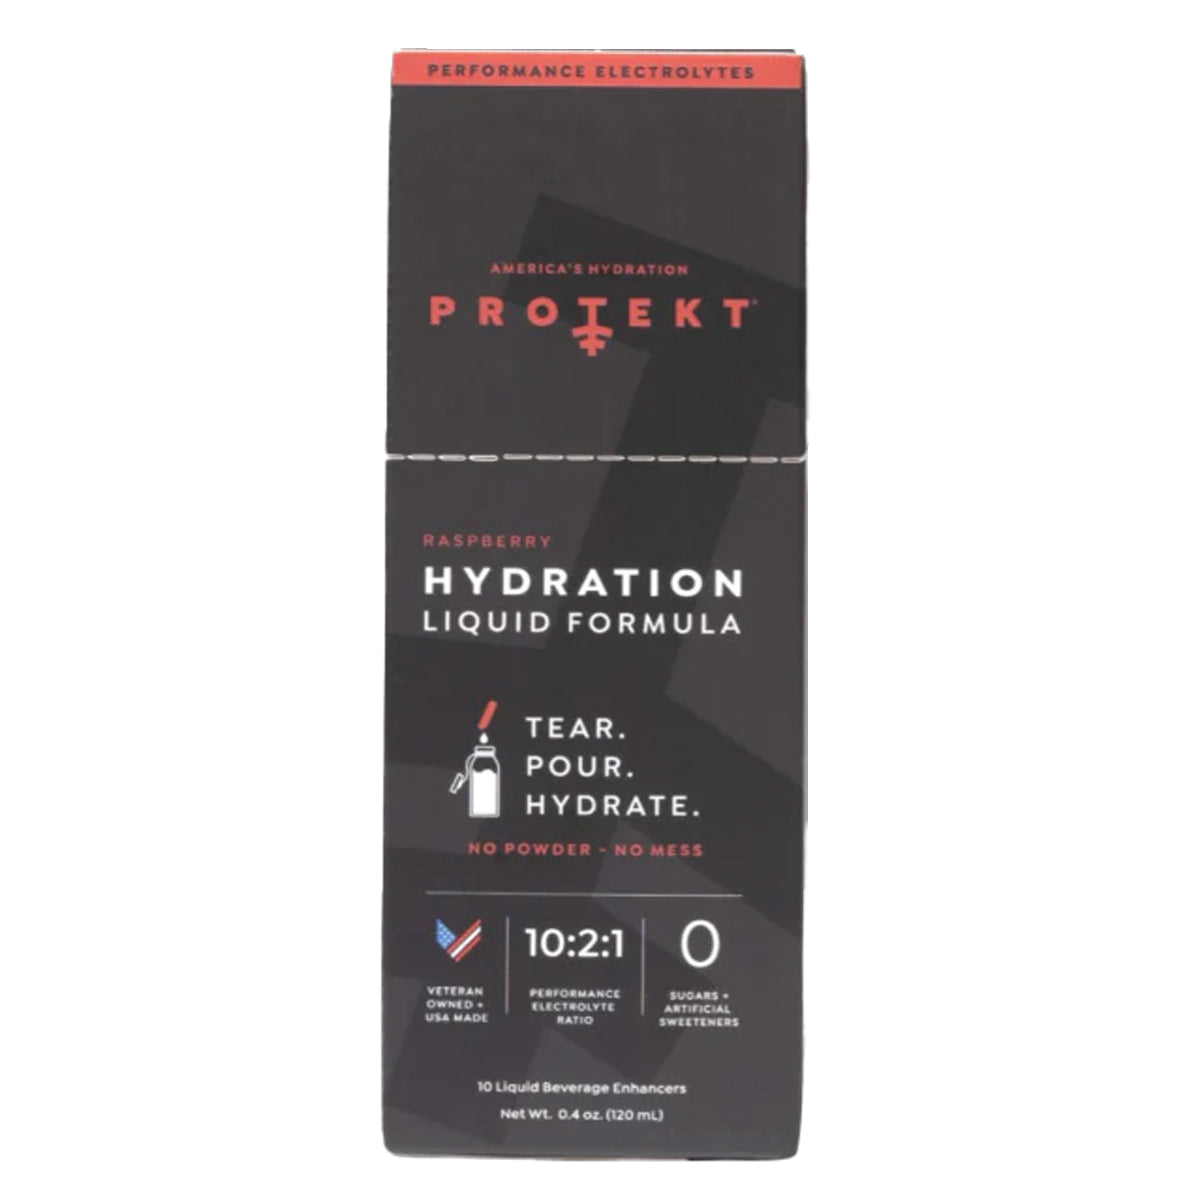 Protekt Hydration Formula